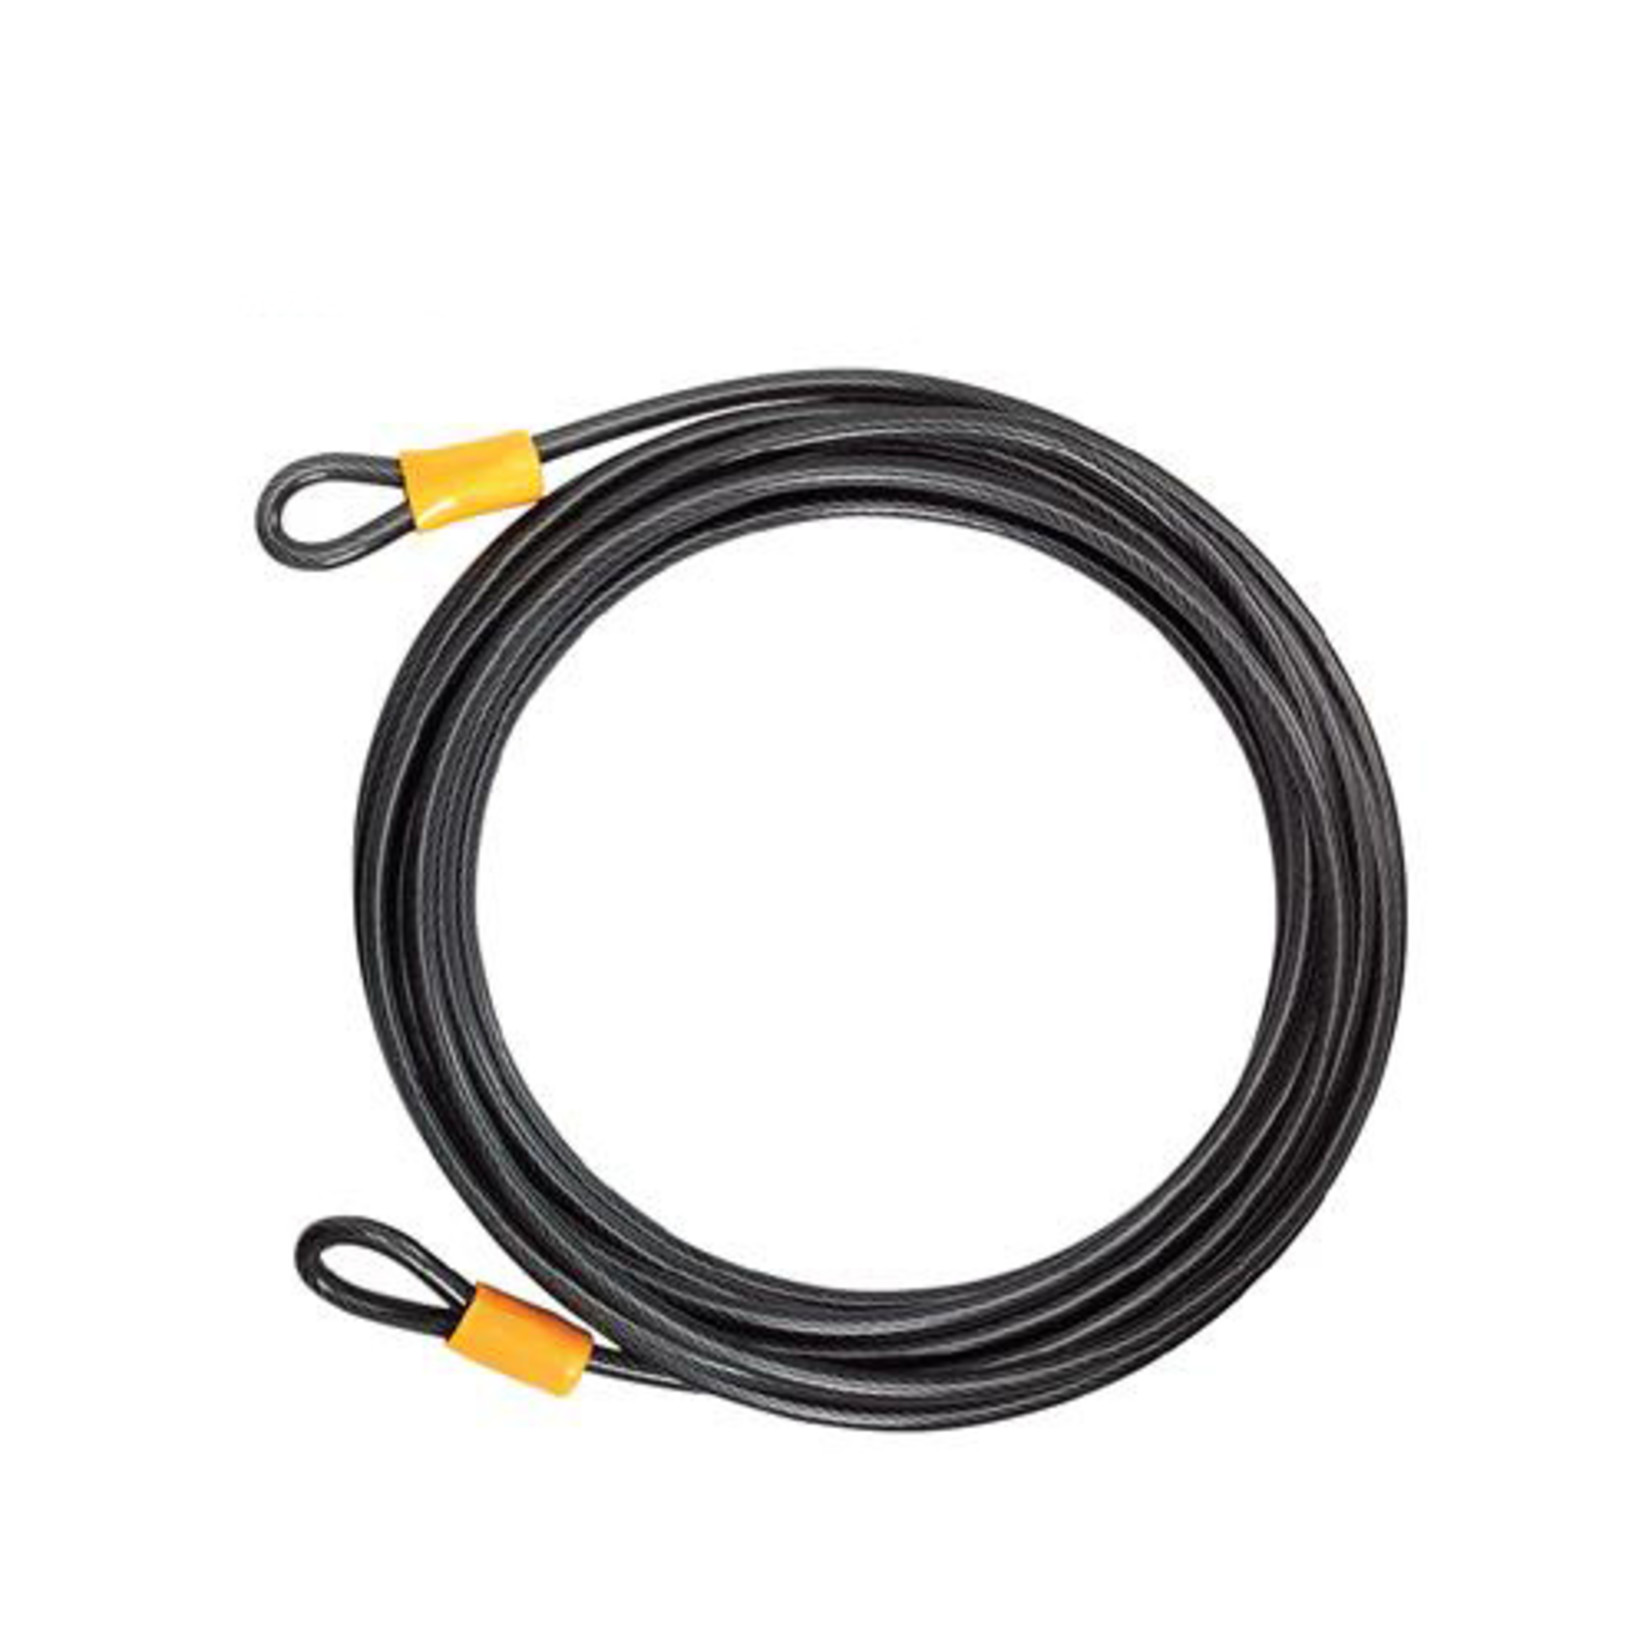 Onguard Onguard Bike Lock - Akita Series - Extra Long Cable - 9.3m x 10mm